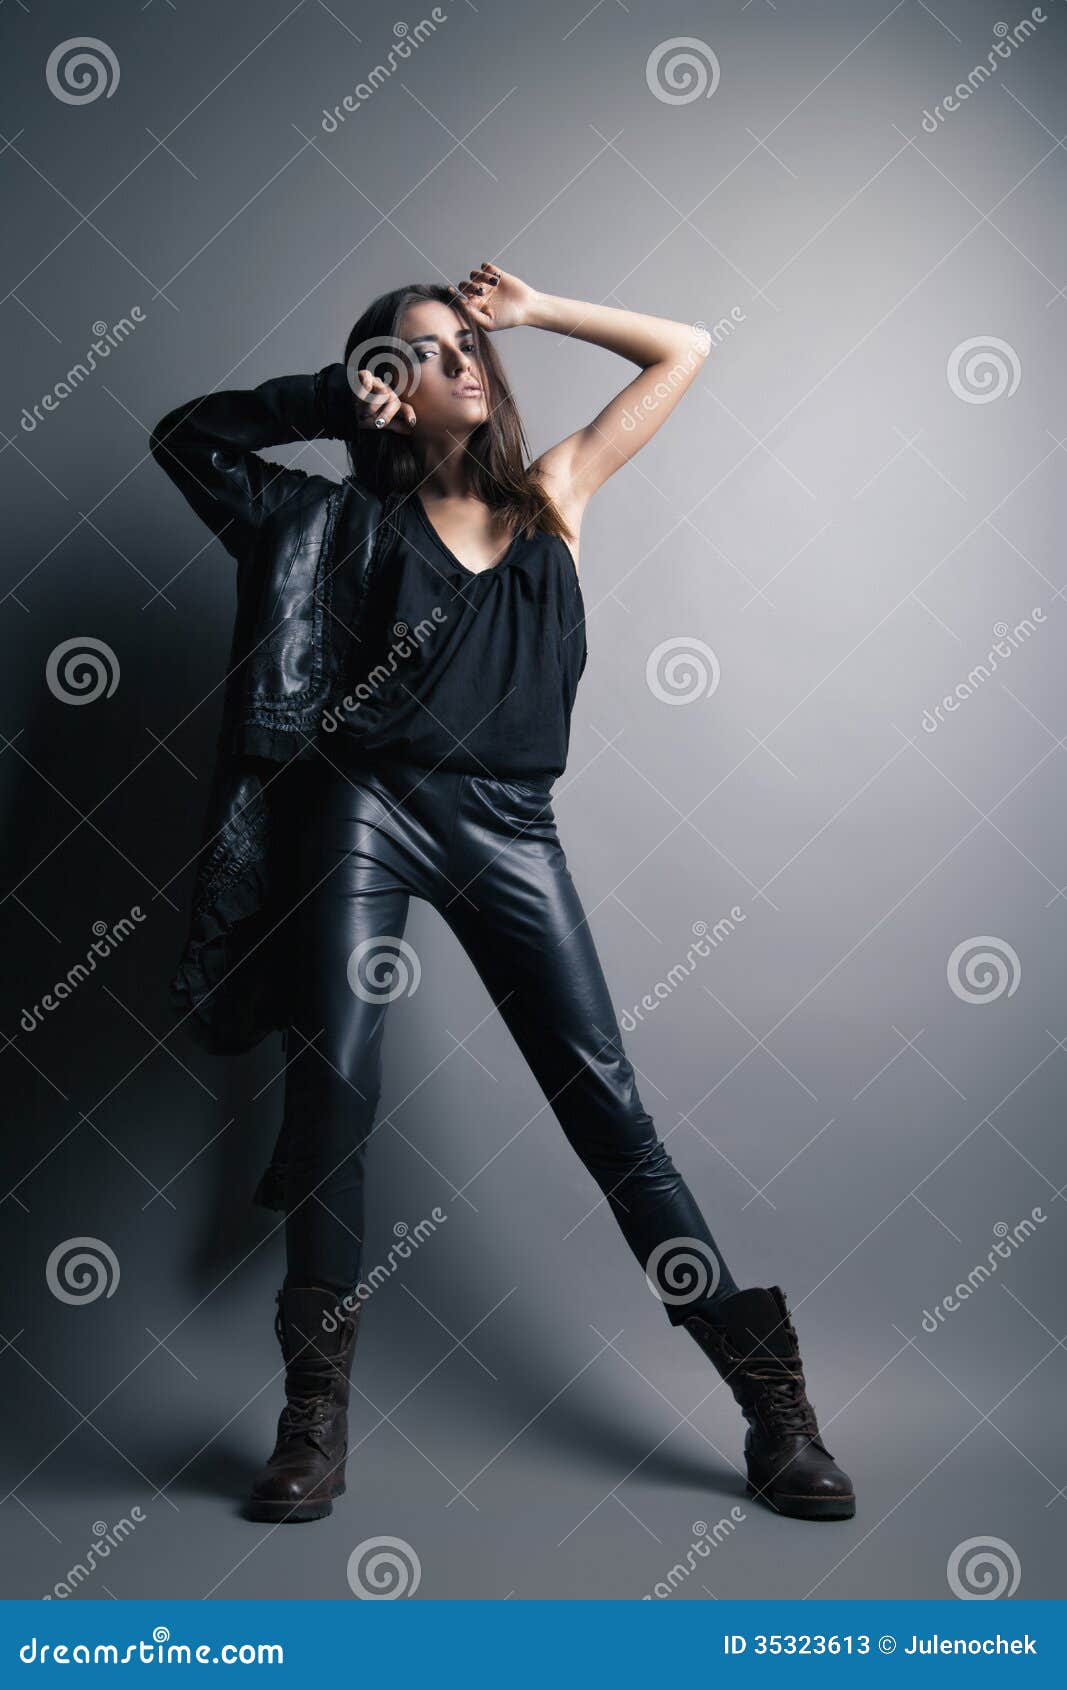 Fashion Model Wearing Leather Pants and Jacket Stock Image - Image of ...